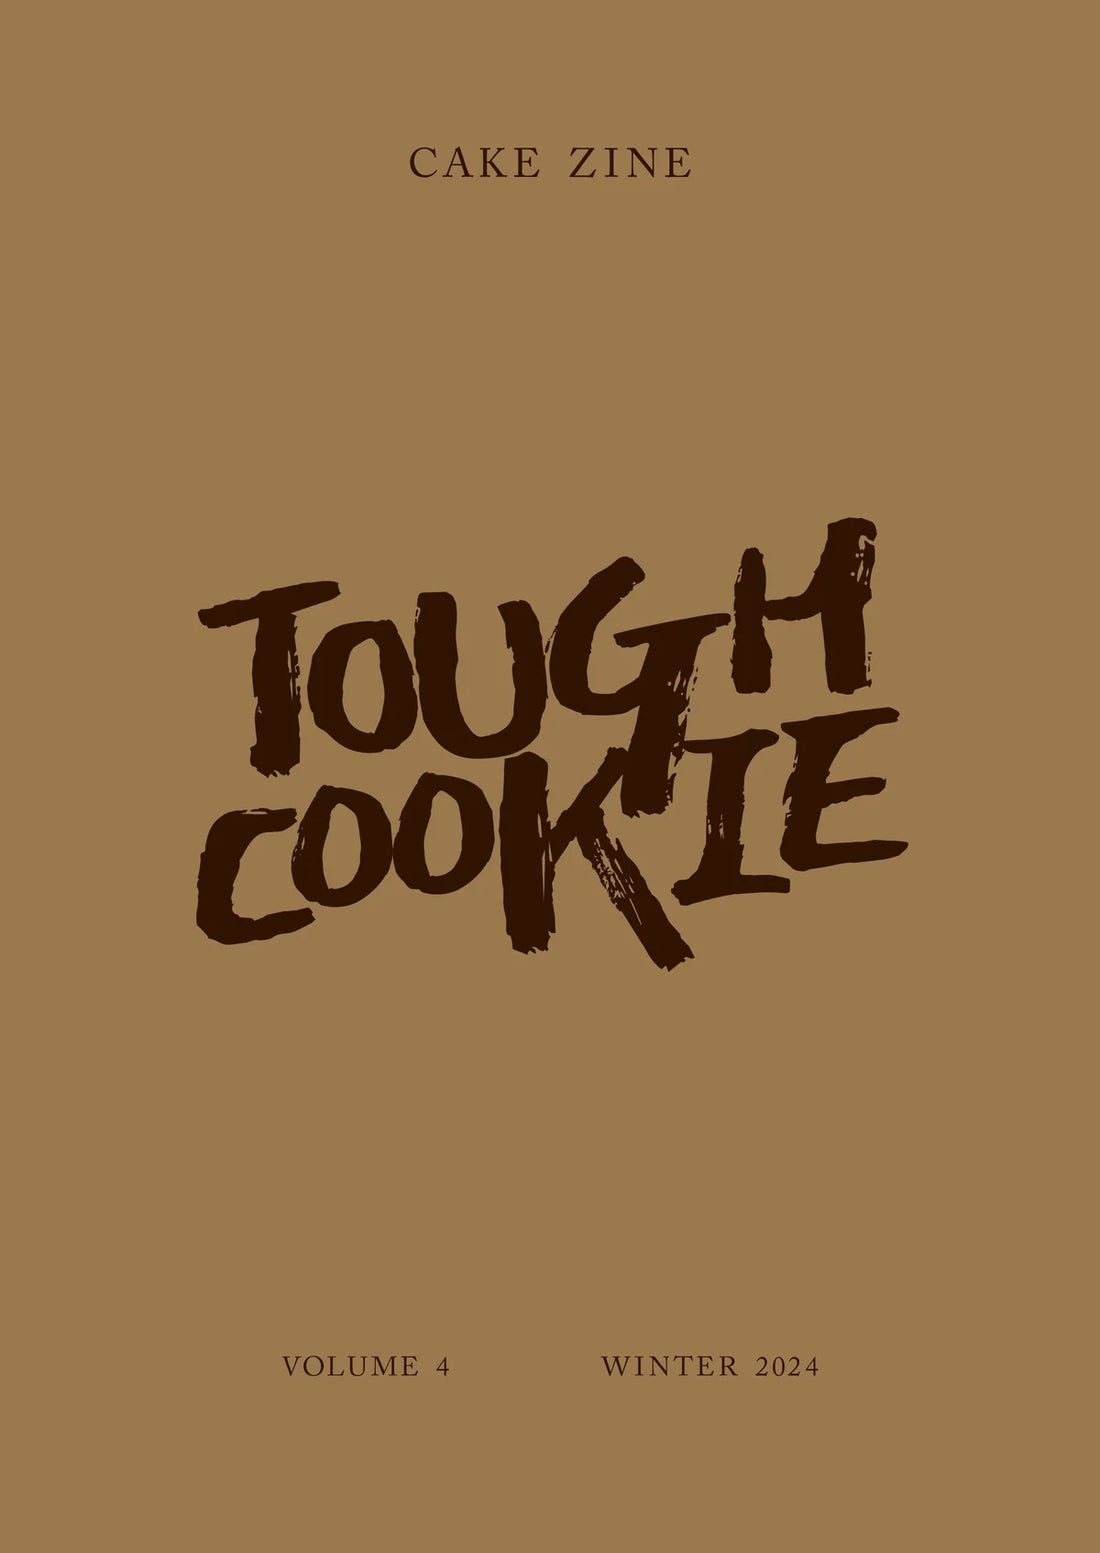 Cake Zine Volume 4 : Tough Cookie